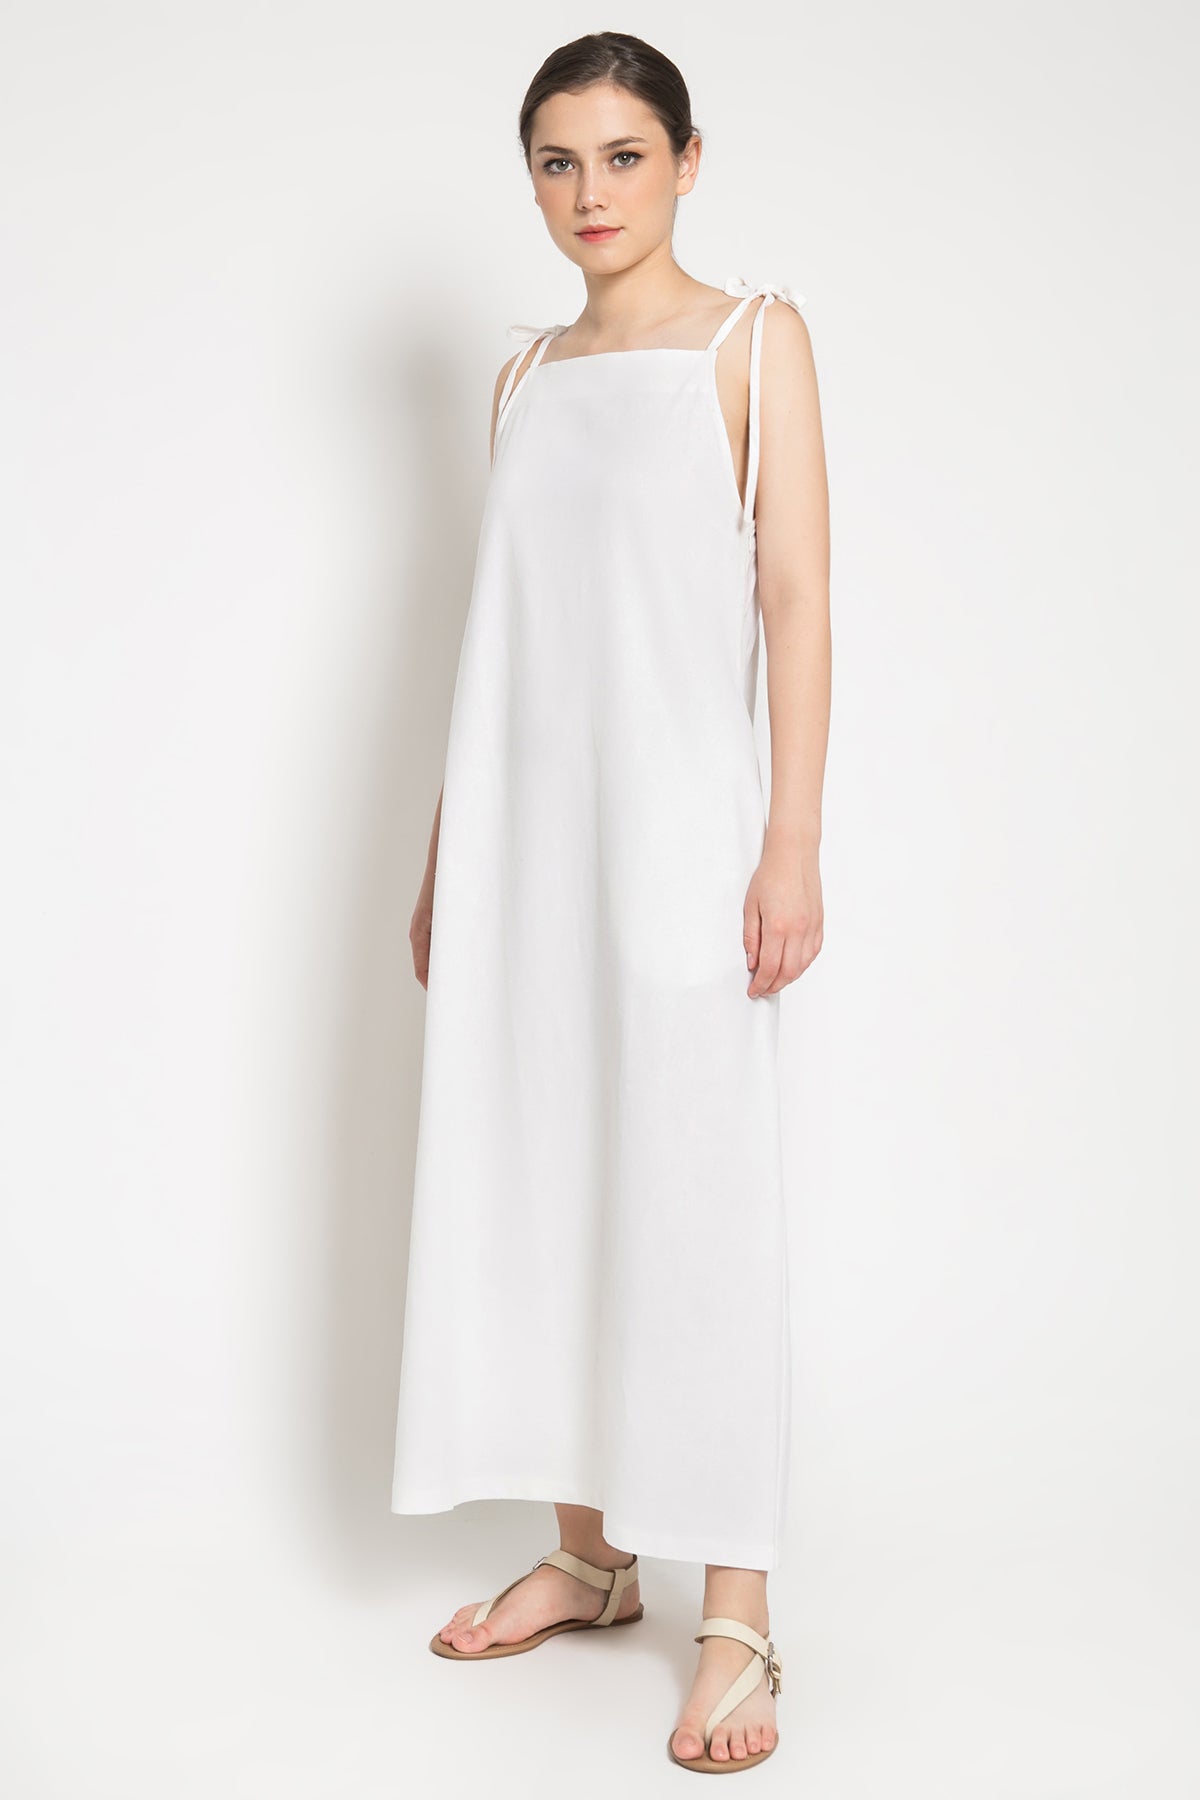 Eden Dress in White